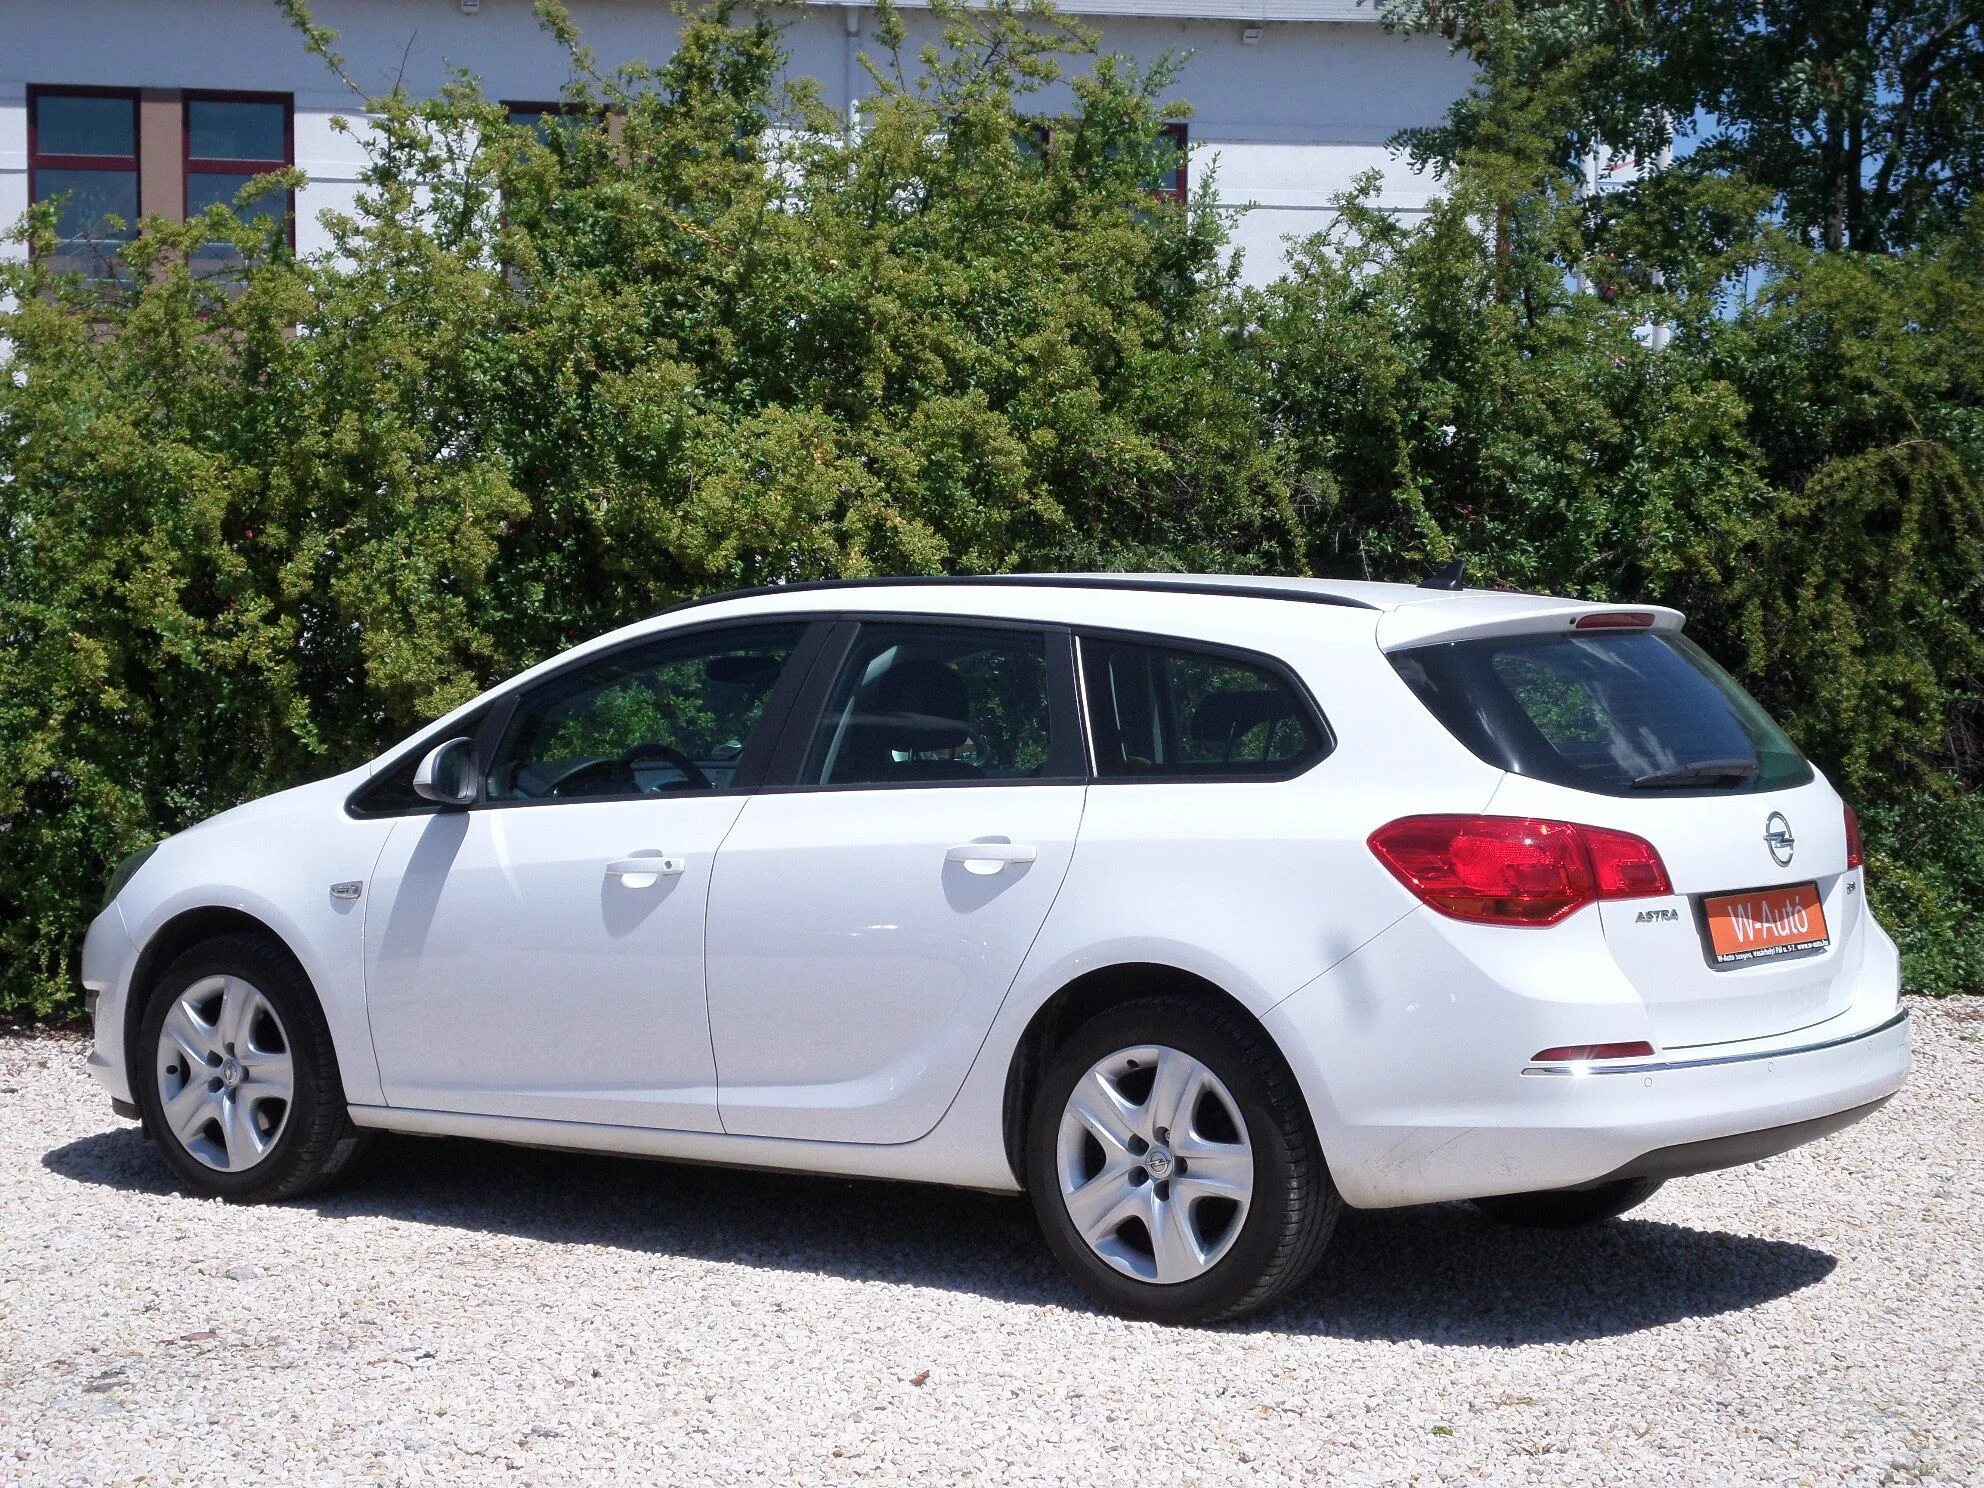 Opel Astra универсал 2011. Opel Astra j 2011 универсал. Opel Astra h универсал 2011. Колесо опель универсал